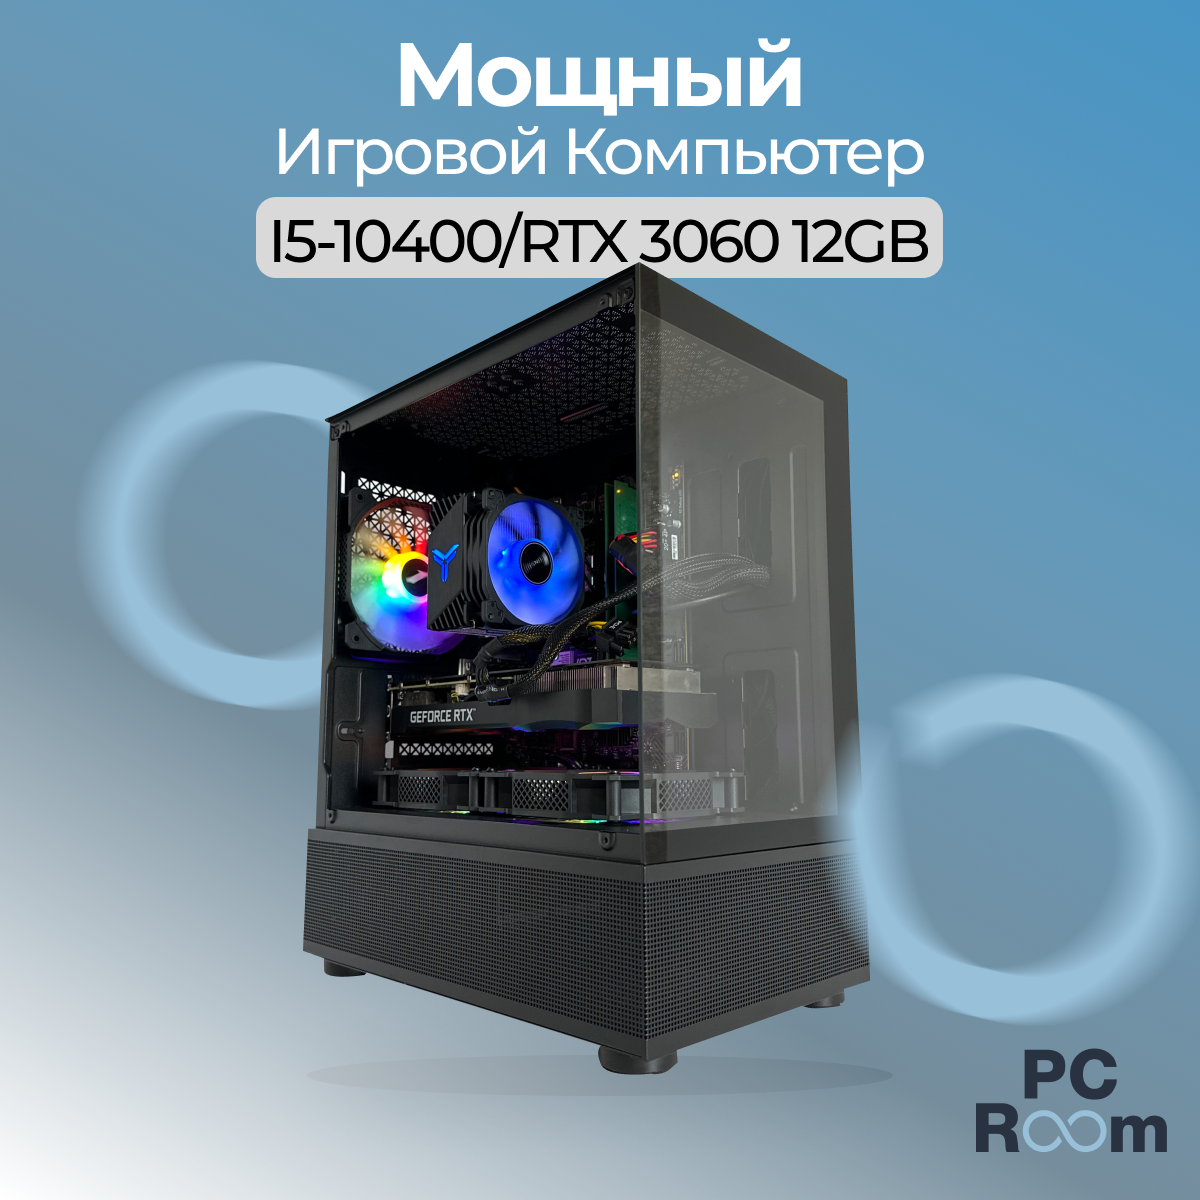 Игровой компьютер M-Stand: I5-10400 / RTX 3060 12GB / 16GB DDR4 RAM / 500GB SSD / RGB PC Room